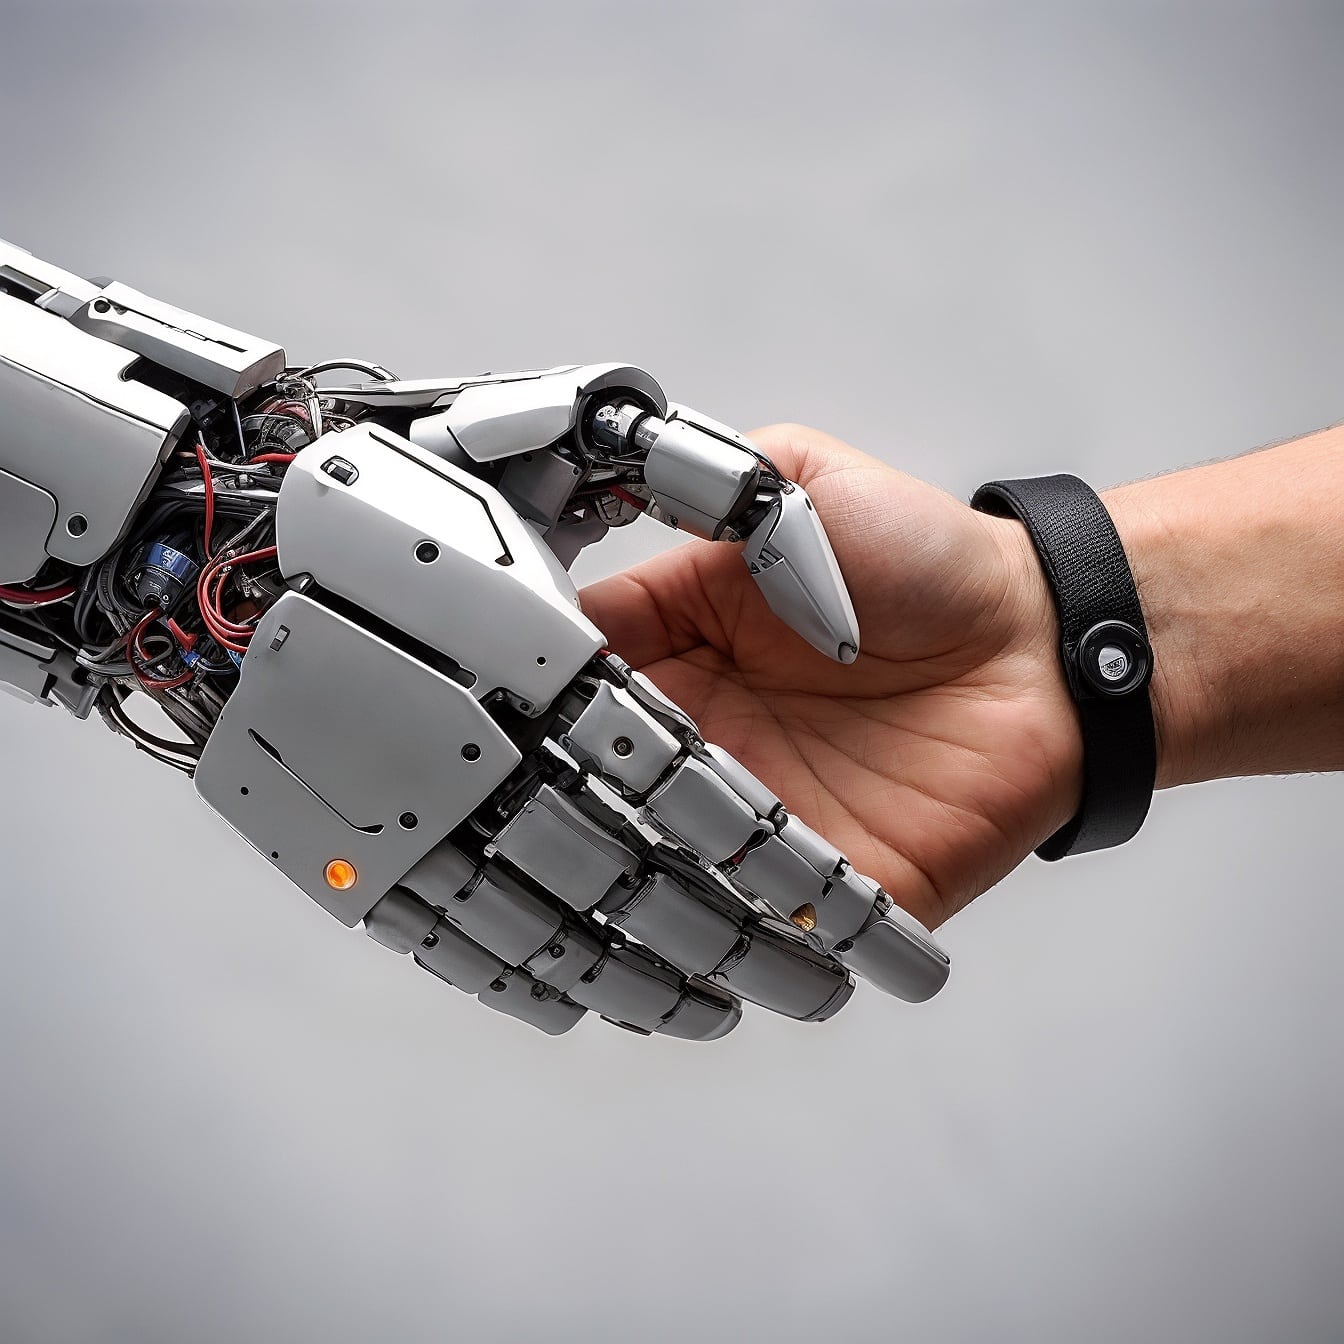 Robotic hand shaking human hand, symbolizing collaboration between man and machine